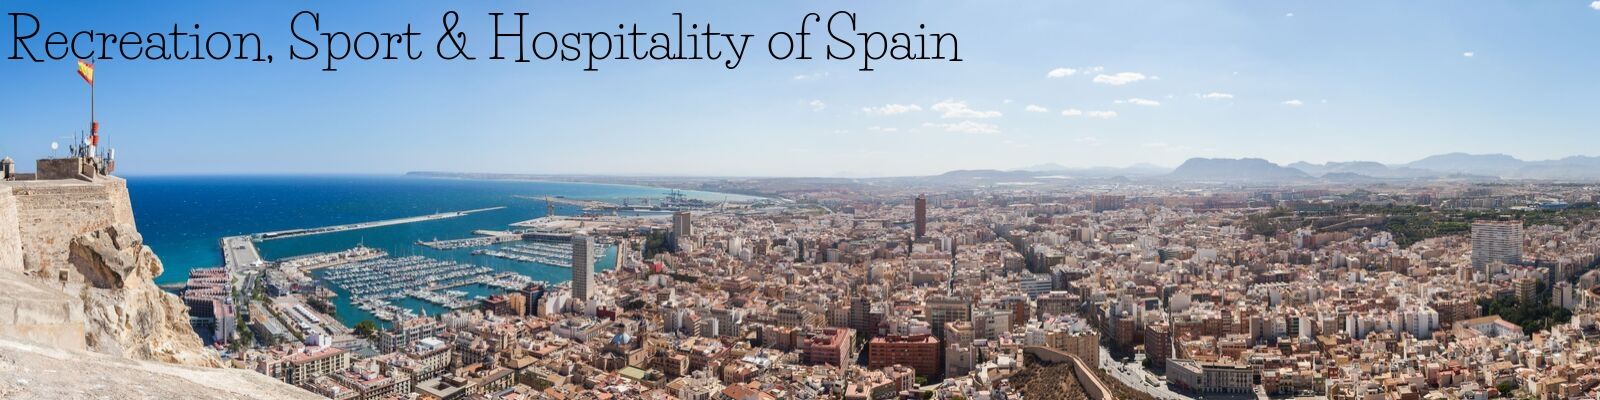 Recreation, Sport & Hospitality of Spain